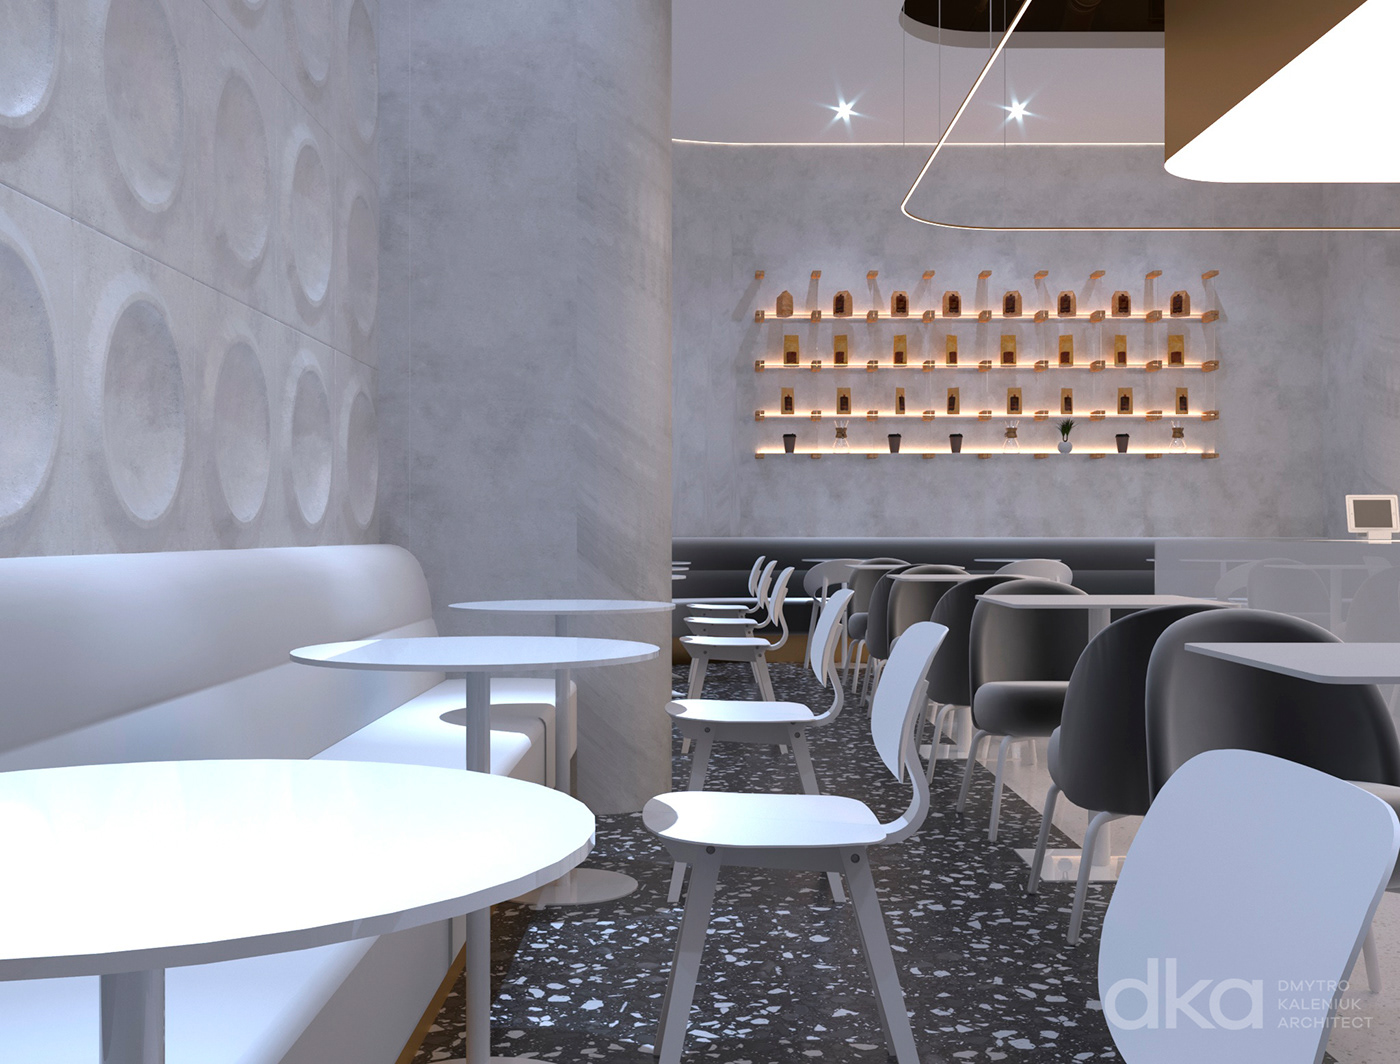 Coffee double dubai Project shop architecture interior design  modern visualization archviz